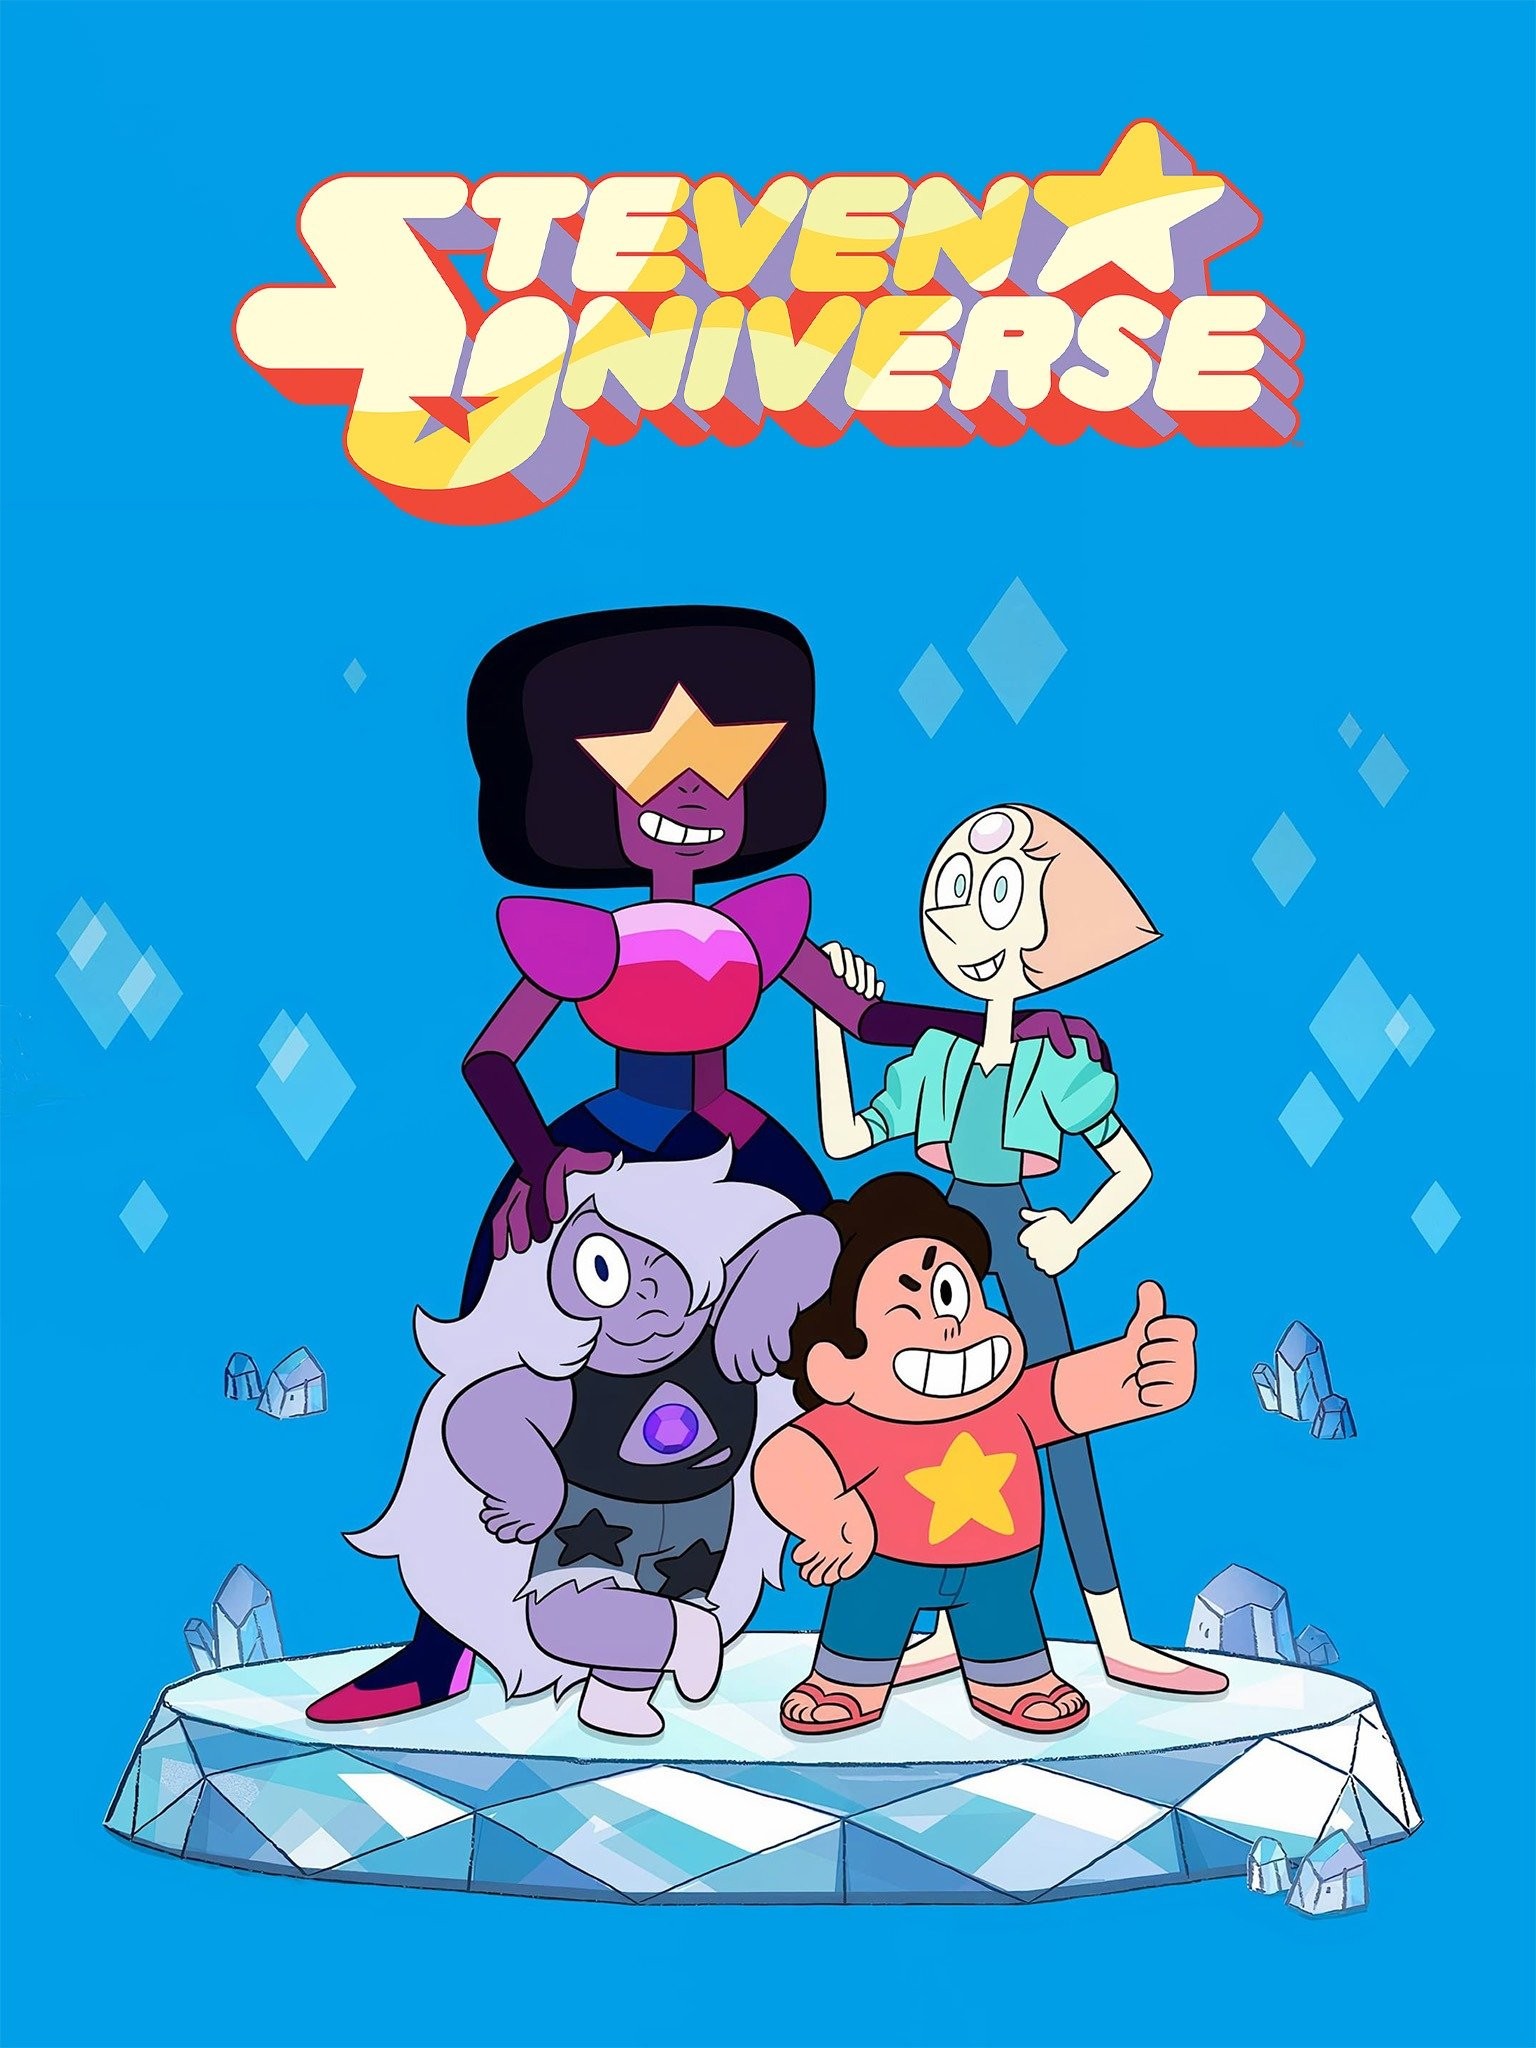 Steven Universe, explained